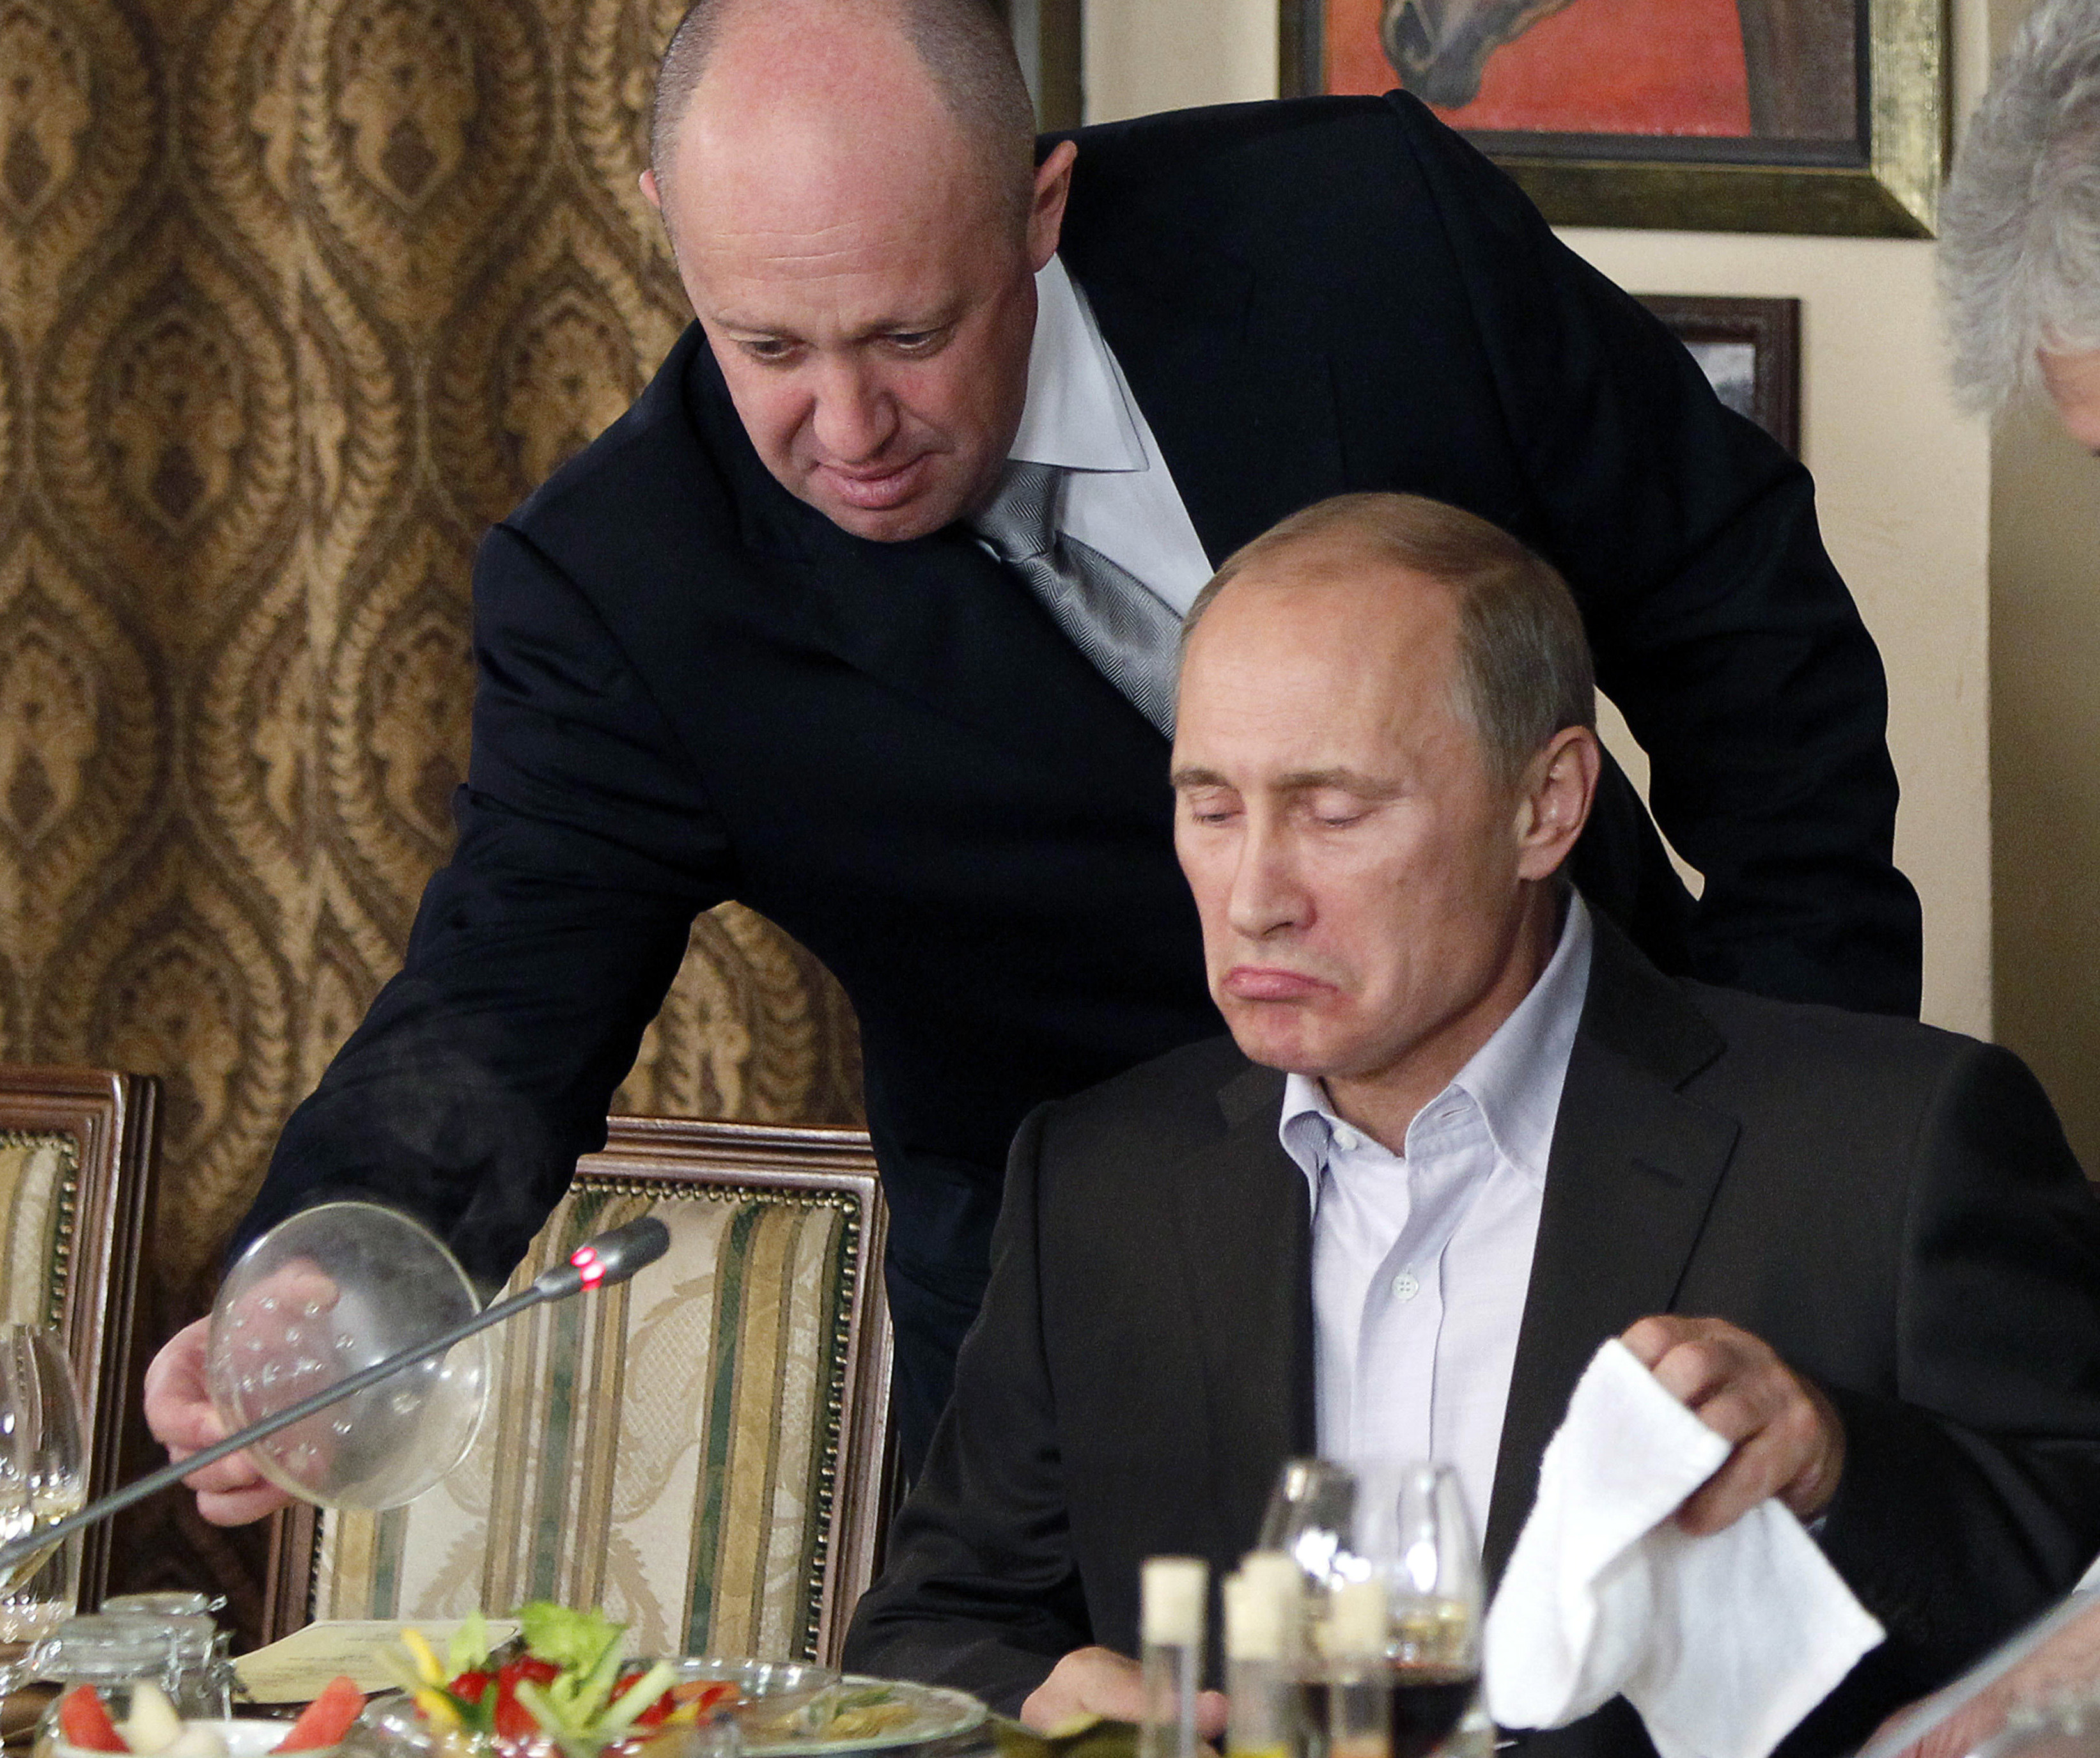 Yevgeny Prigozhin (left) serves food to Russian Prime Minister Vladimir Putin during dinner at Prigozhin’s restaurant outside Moscow in November 2011. Photo: AP